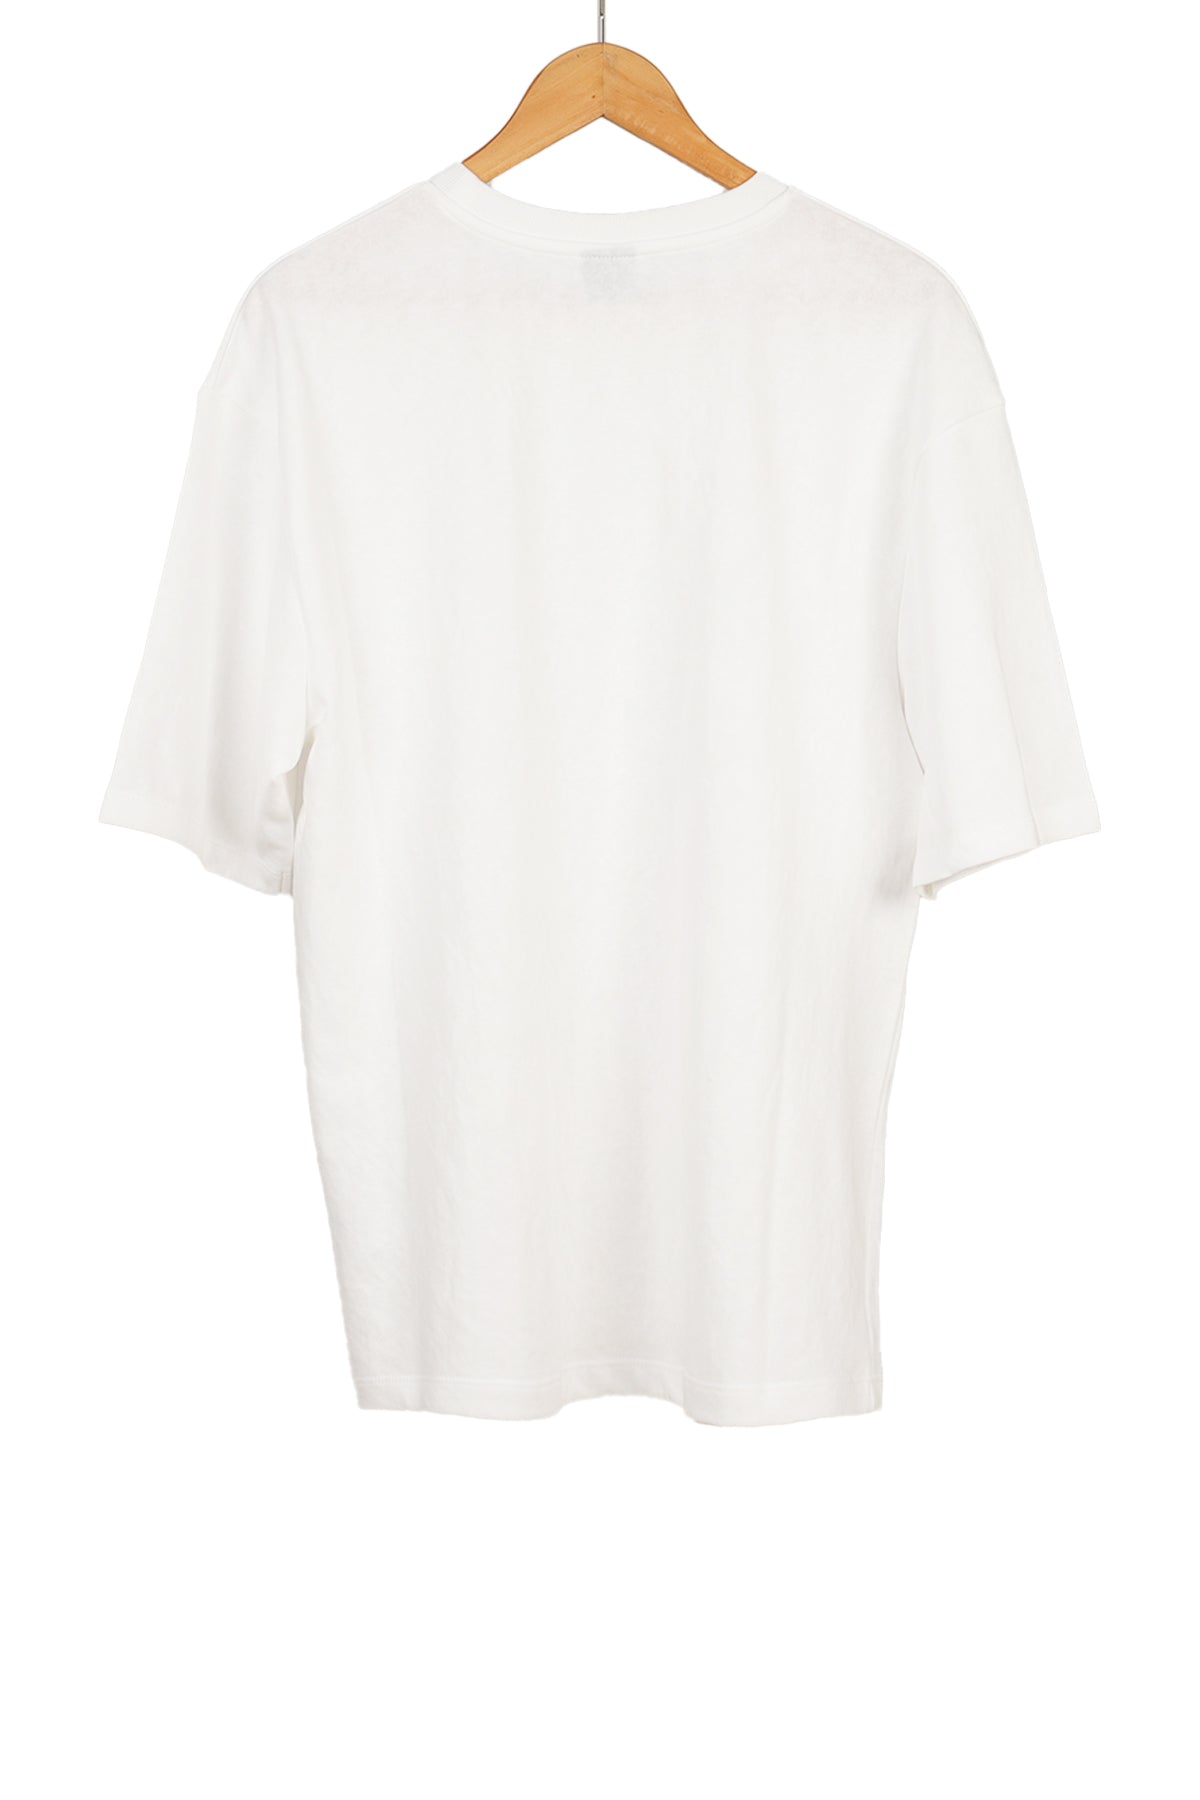 Hustle Men's Short Sleeve Oversize Casual T-Shirt